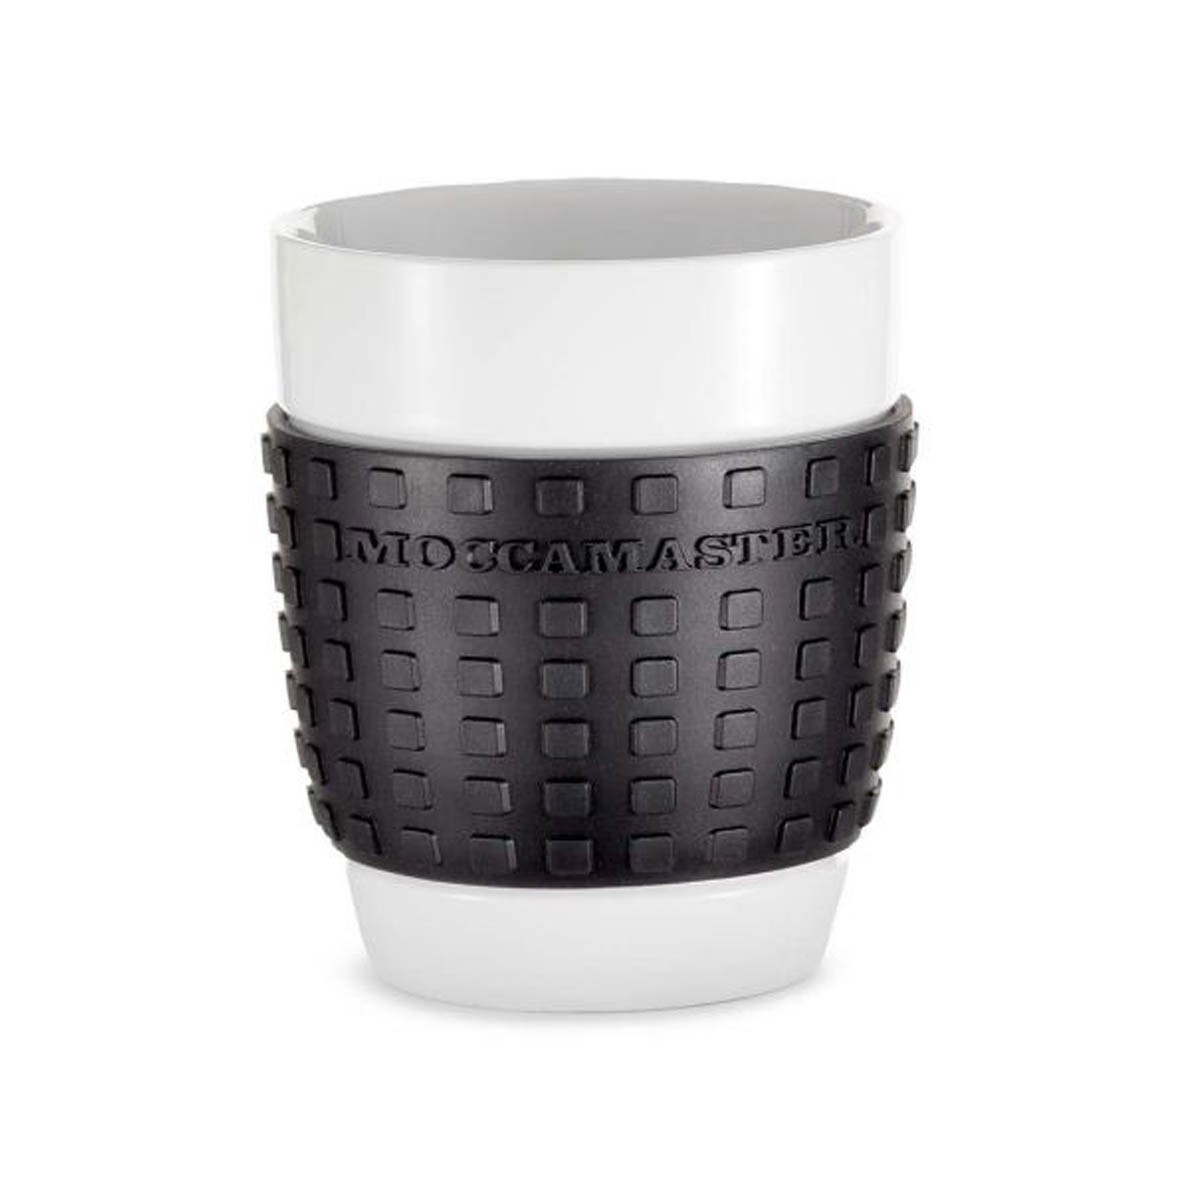 Moccamaster Cup One Porzellan Kaffeebecher Schwarz online kaufen bei Kaffee Rauscher